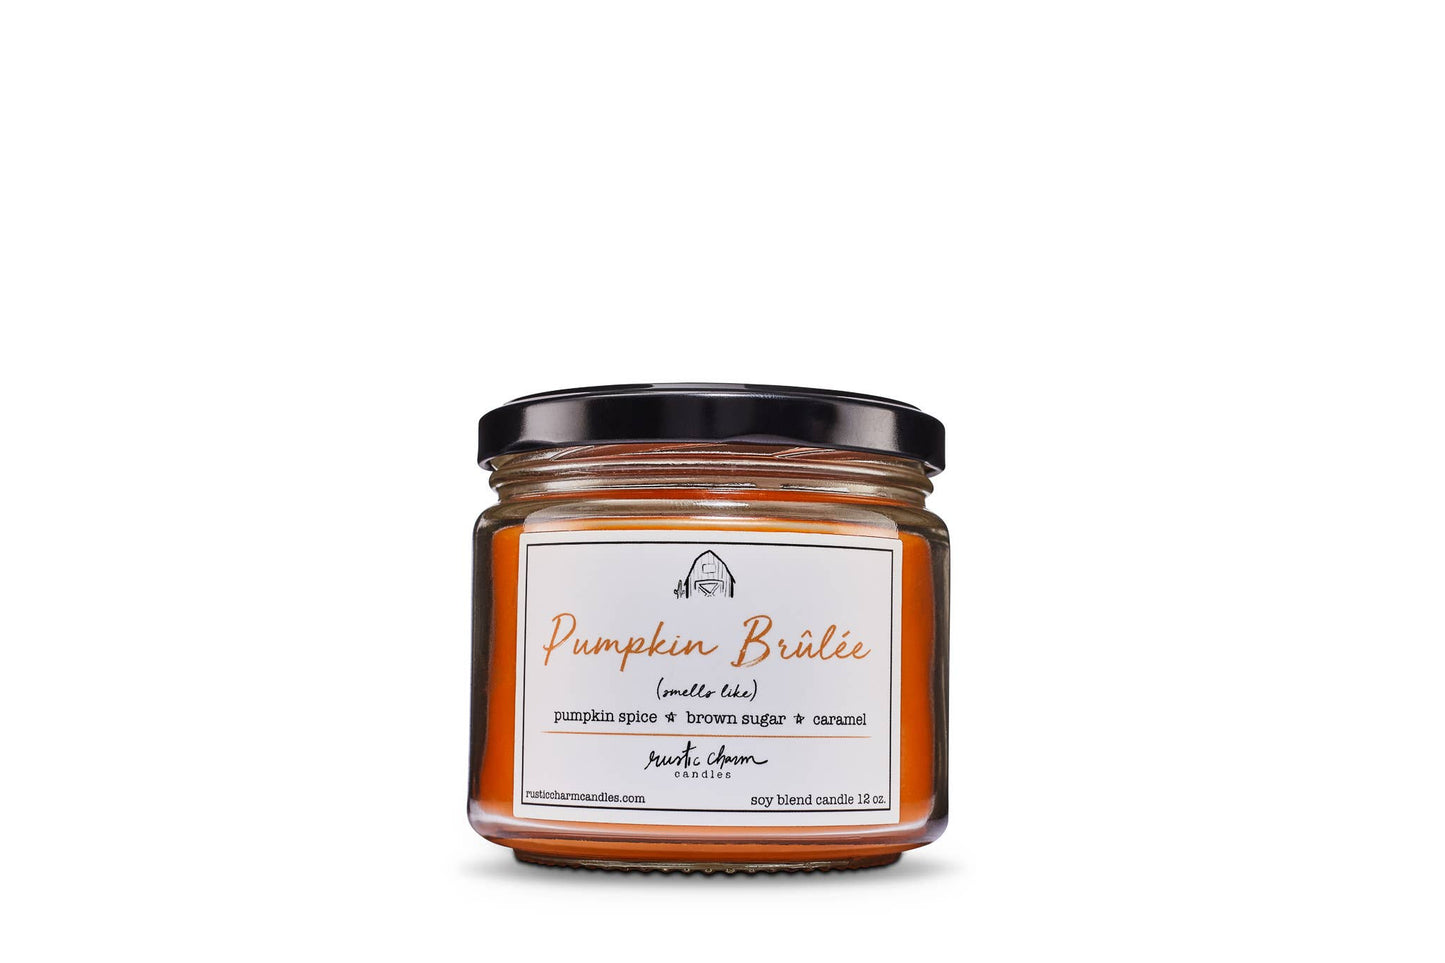 Pumpkin Brulee Candle